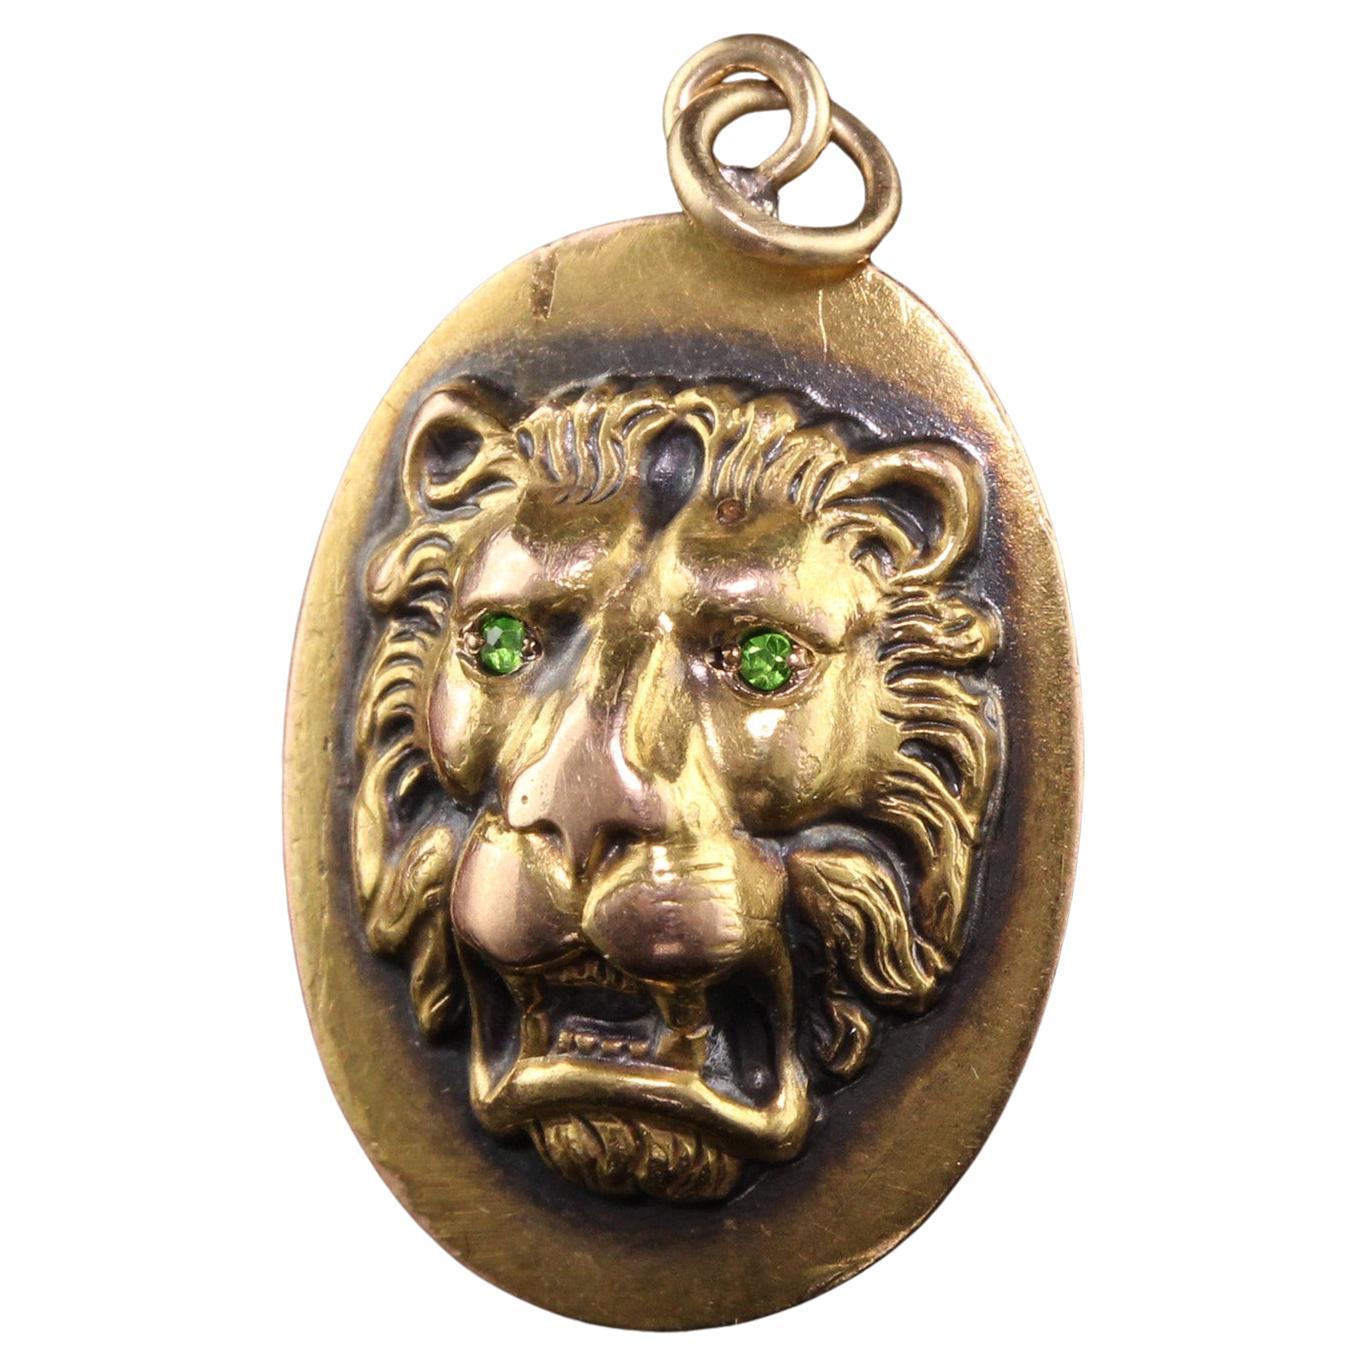 Antique Victorian 14K Yellow Gold Demantoid Eye Lion Pendant